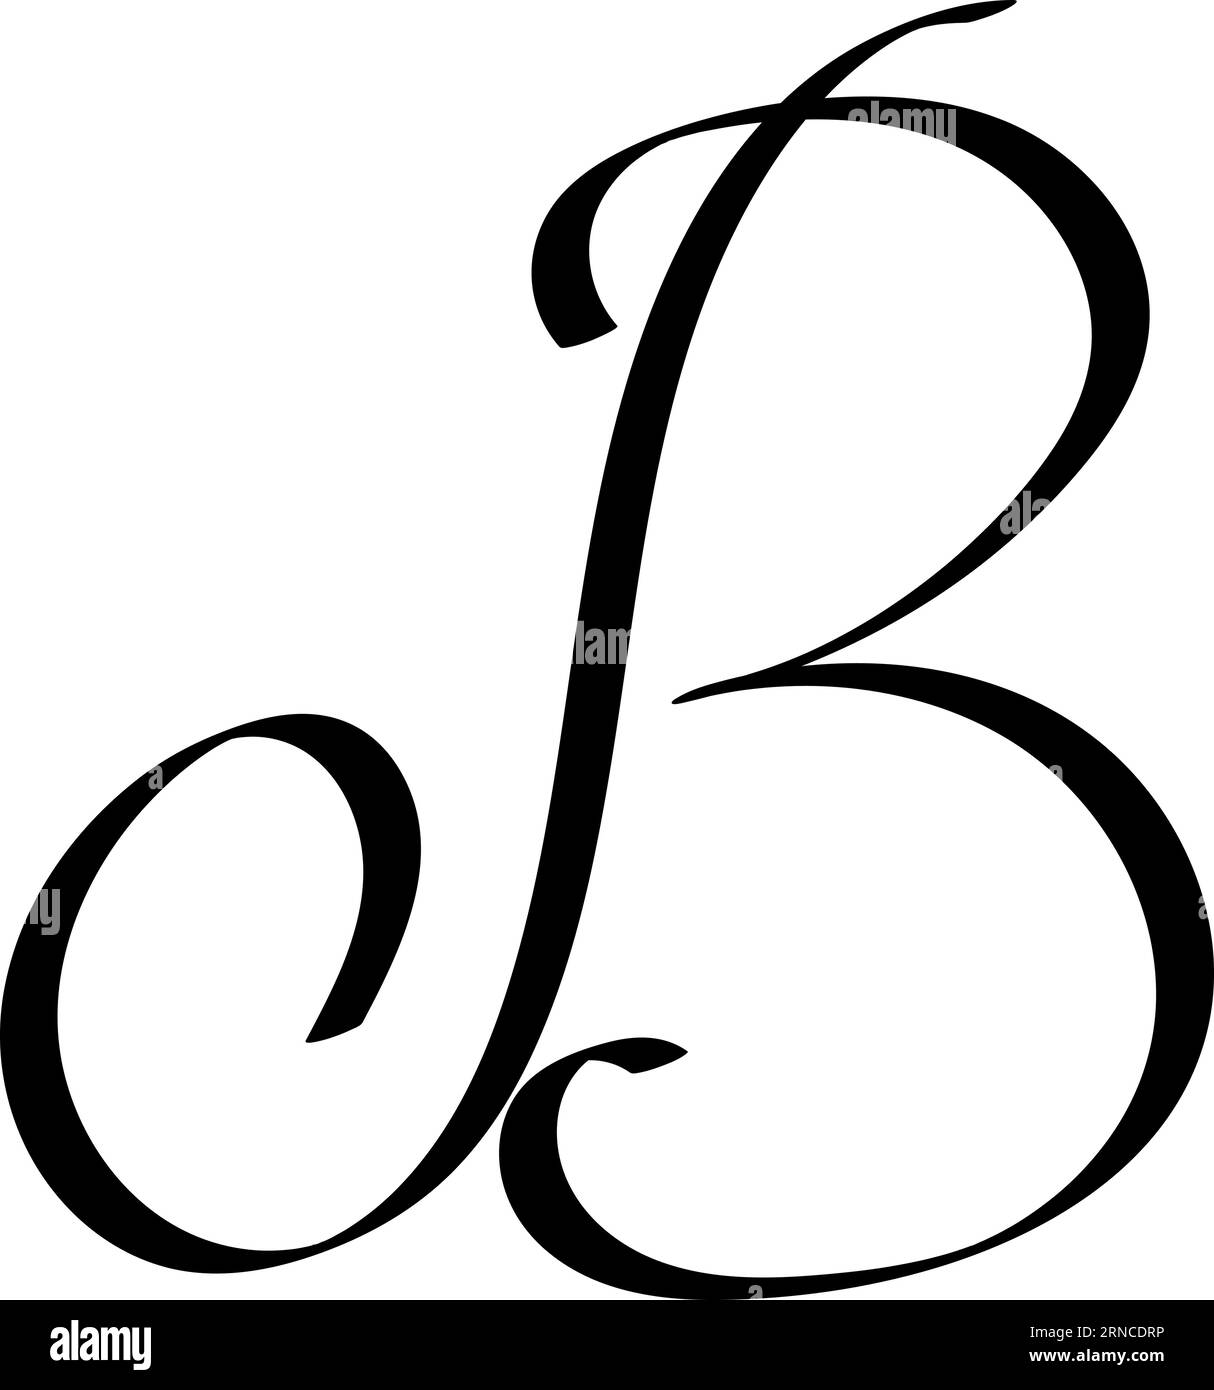 First capital letter B logo calligraphy design stock illustration Stock Vector